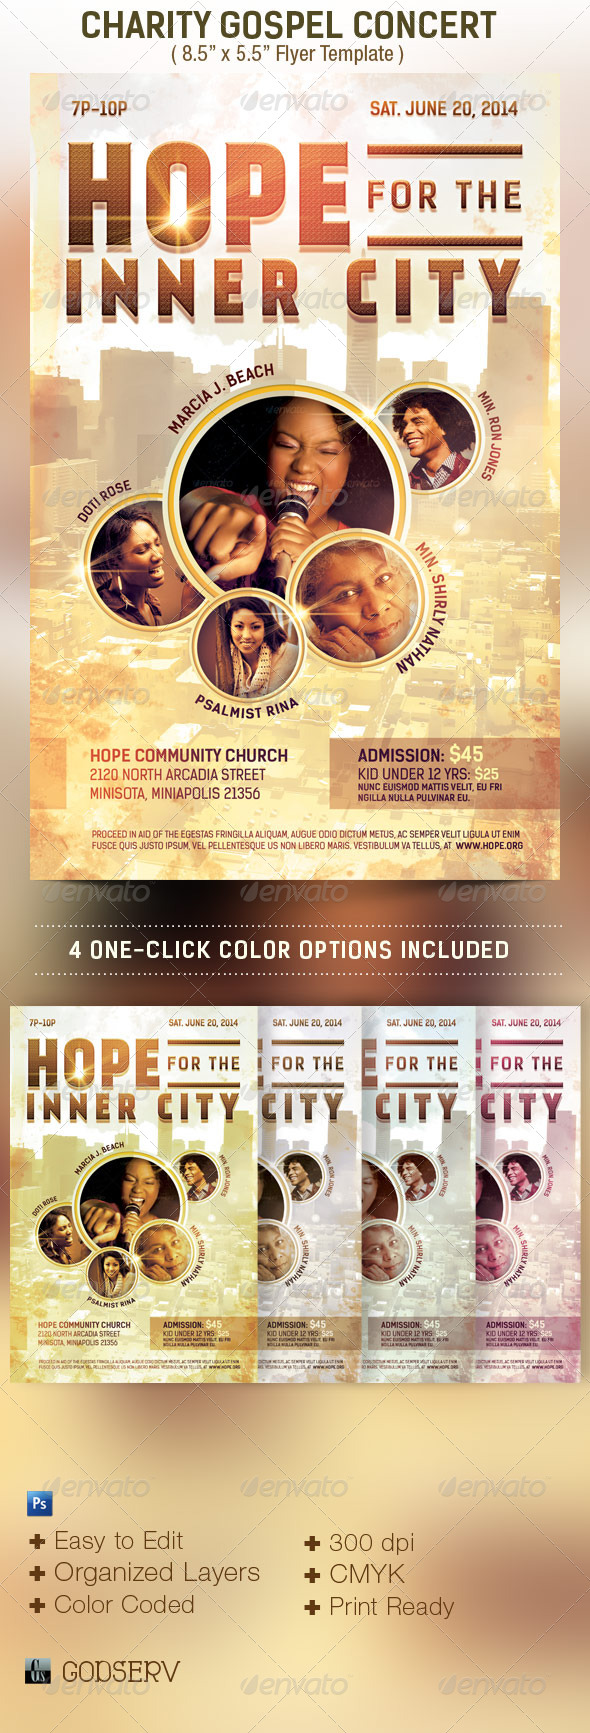 Charity-Gospel-Concert-Flyer-Template-Preview